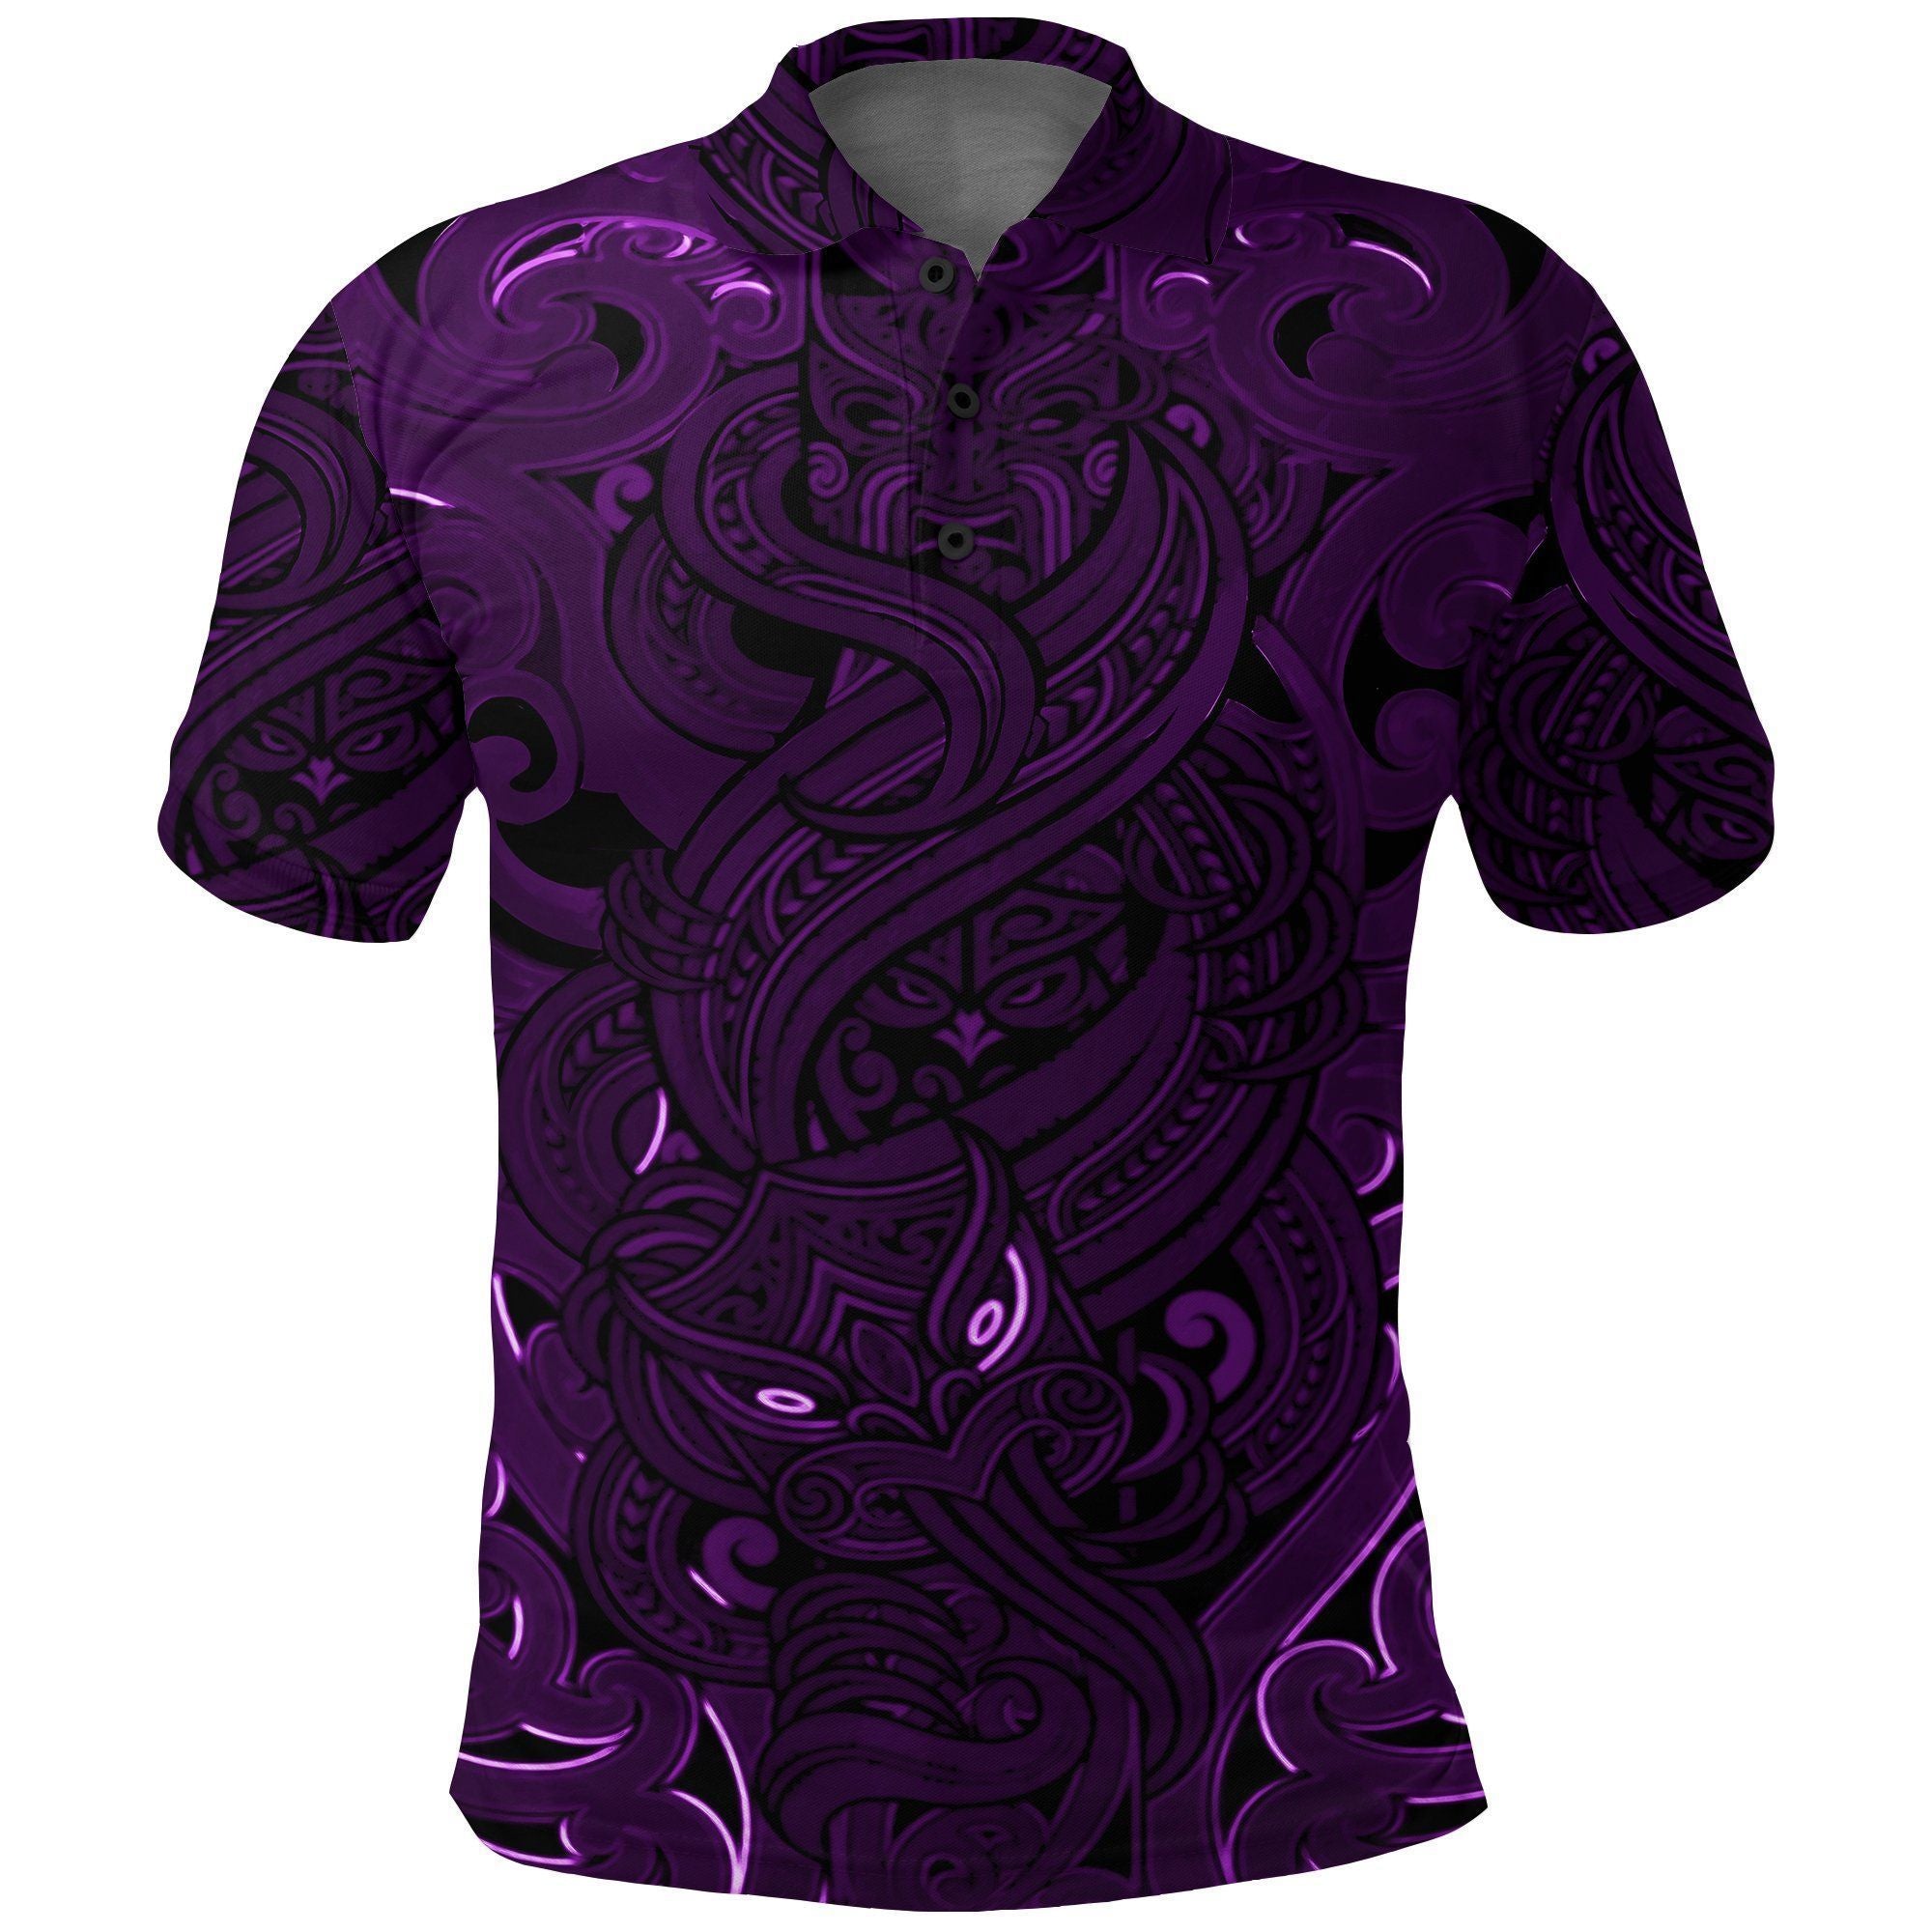 Polynesian Pride Apparel New Zealand Polo Shirt, Maori Gods Golf Shirt, Tumatauenga (God of War) Purple Unisex Purple - Polynesian Pride